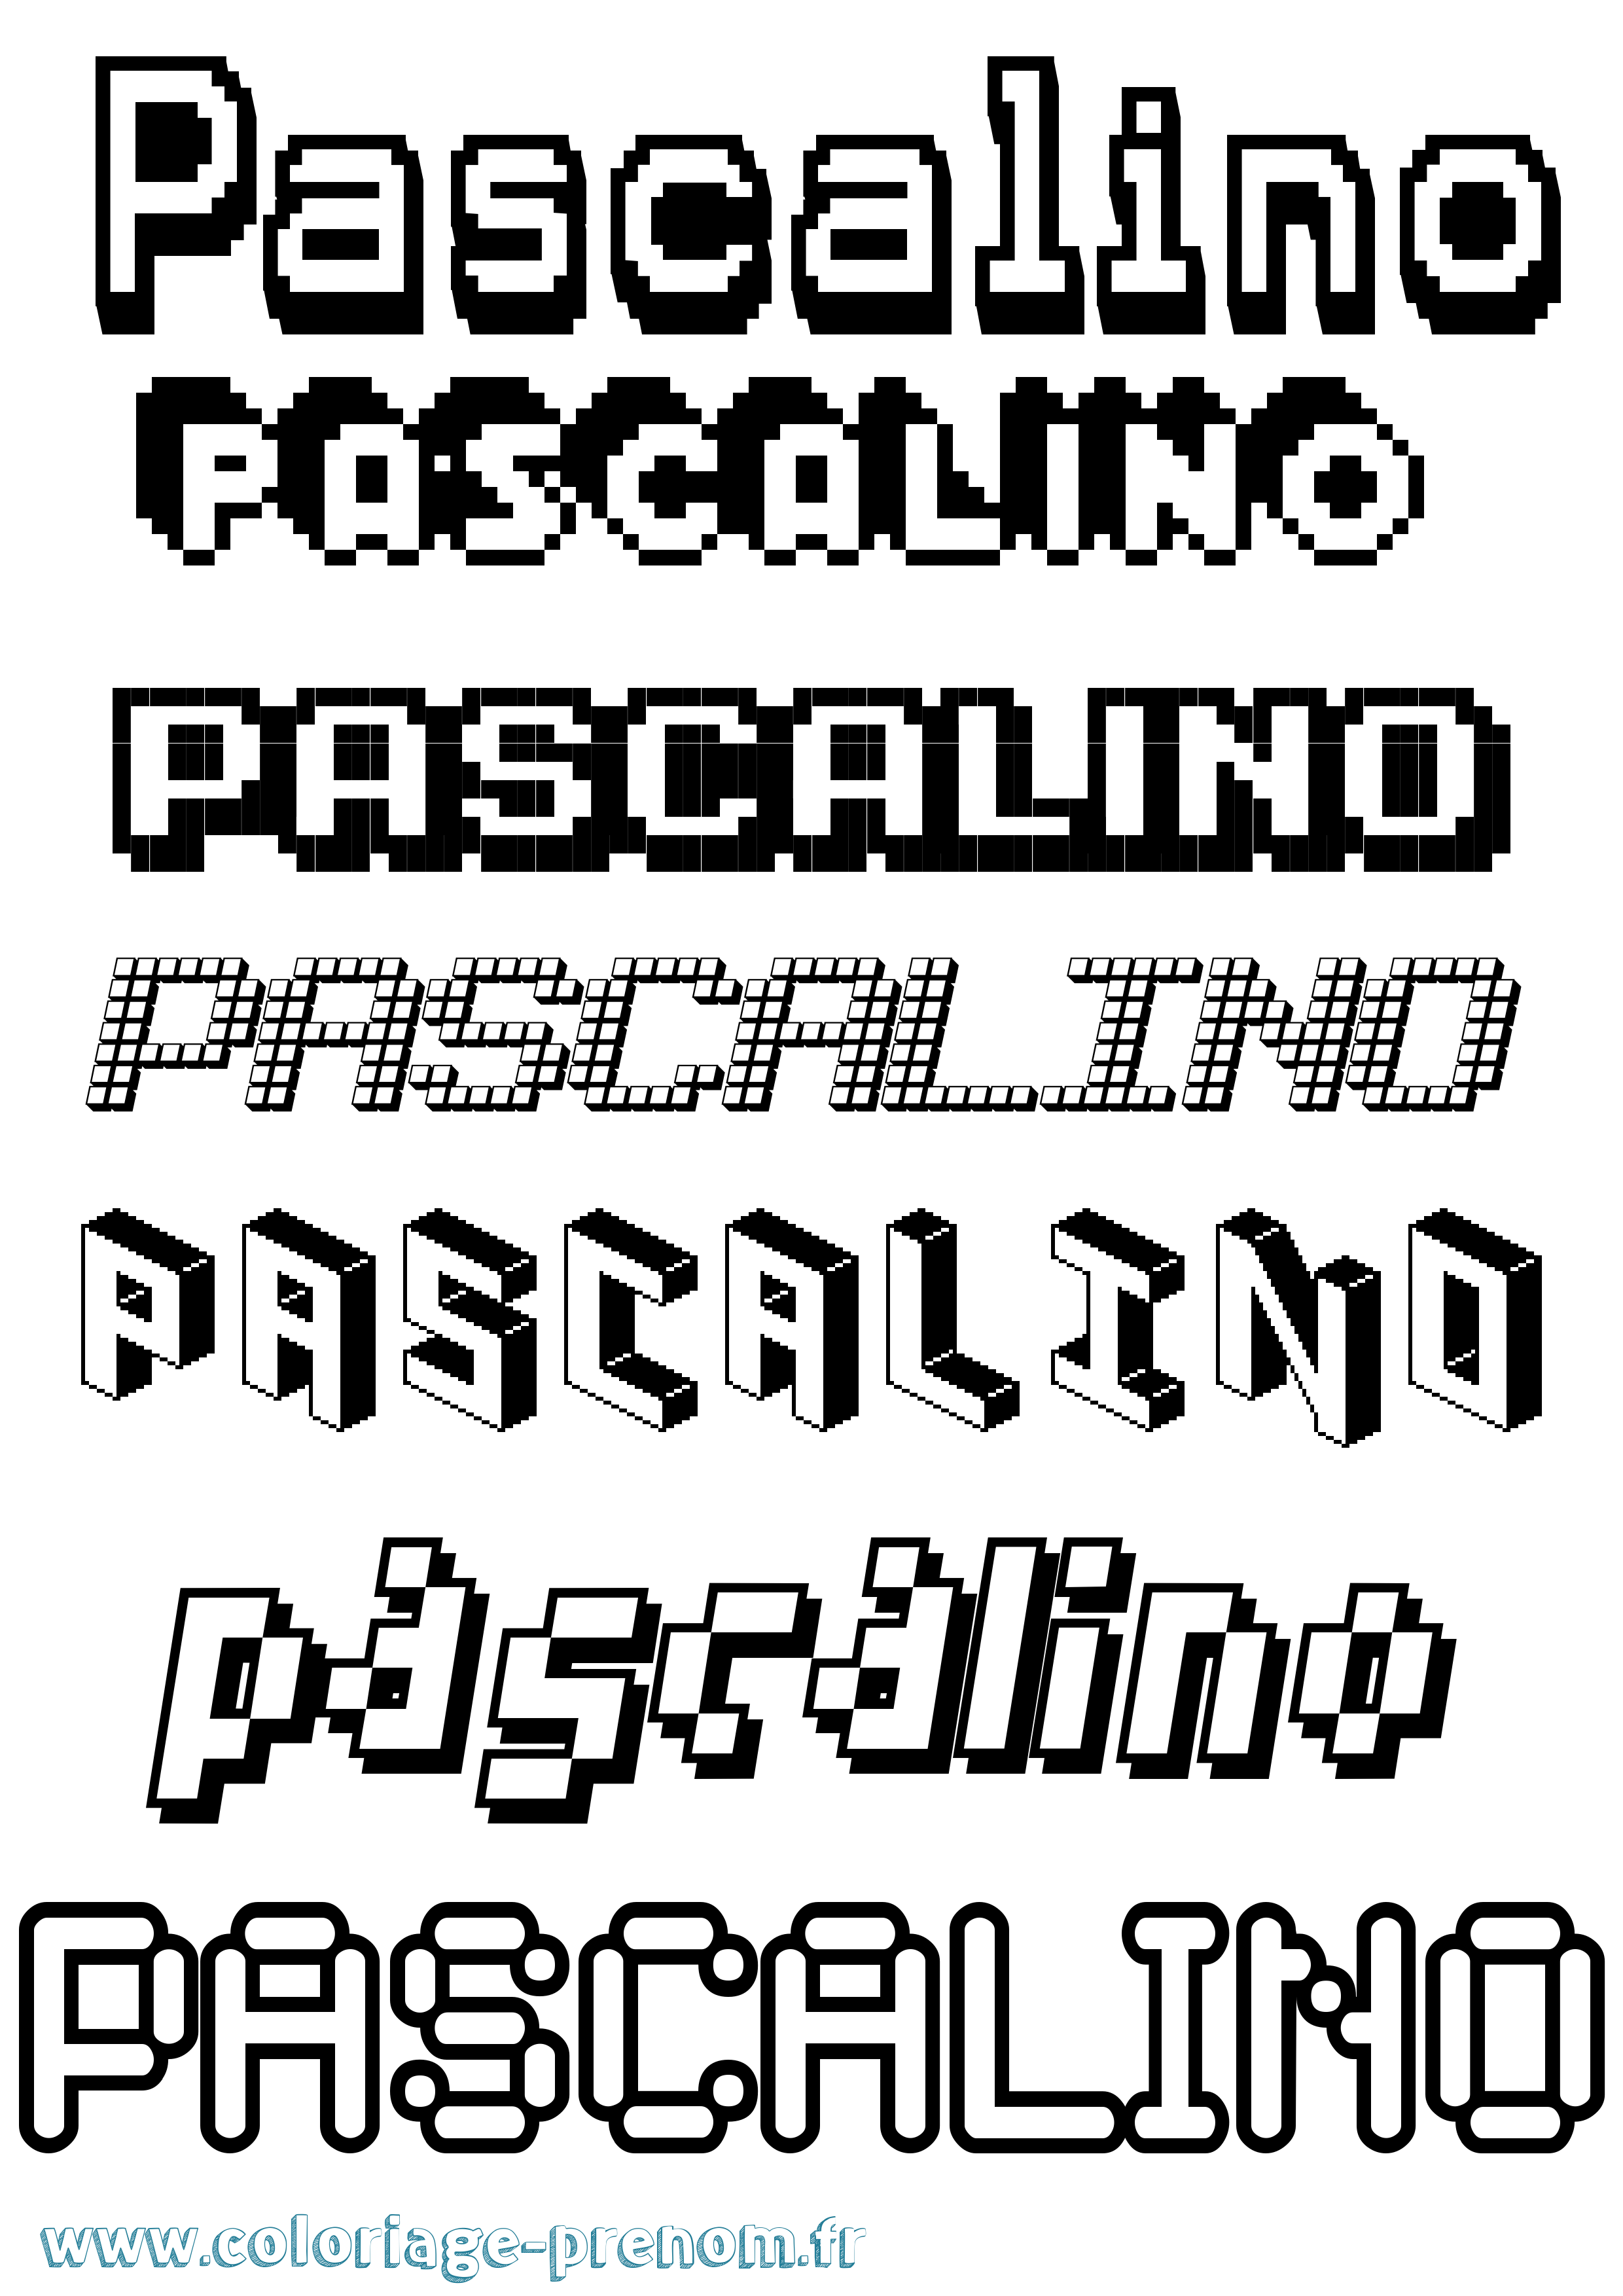 Coloriage prénom Pascalino Pixel